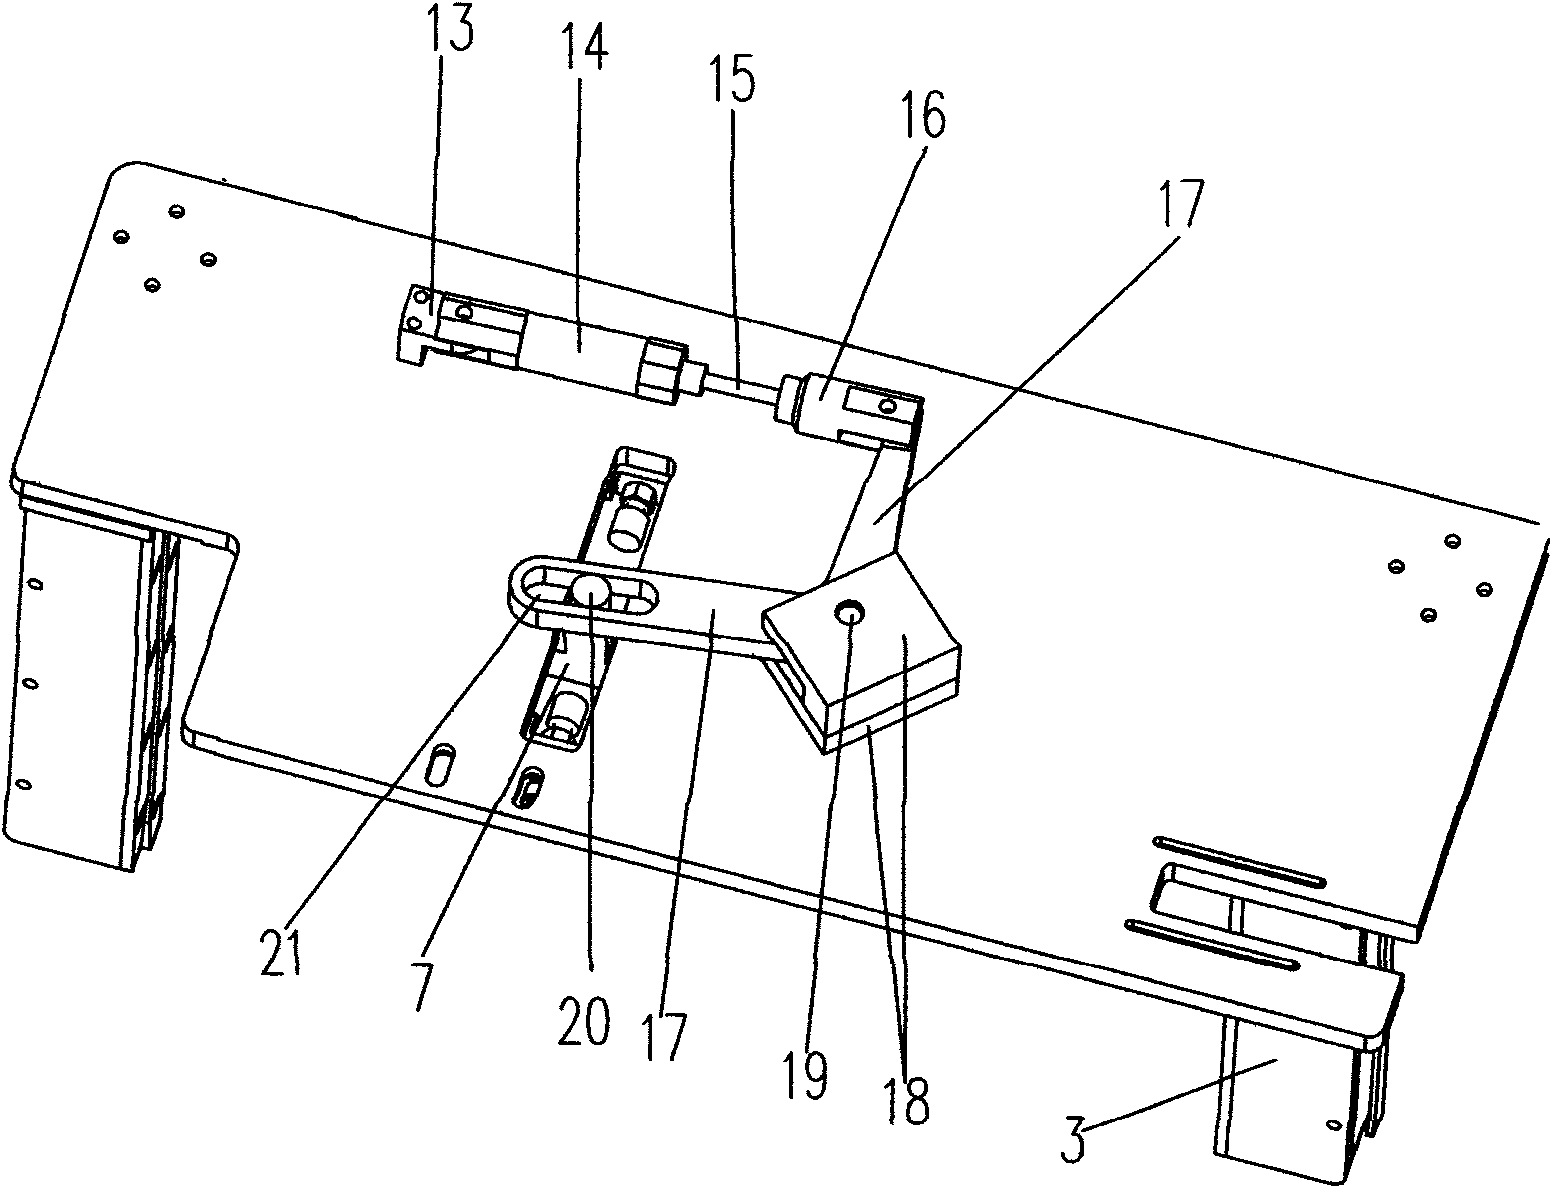 Ejector sleeve device mechanism